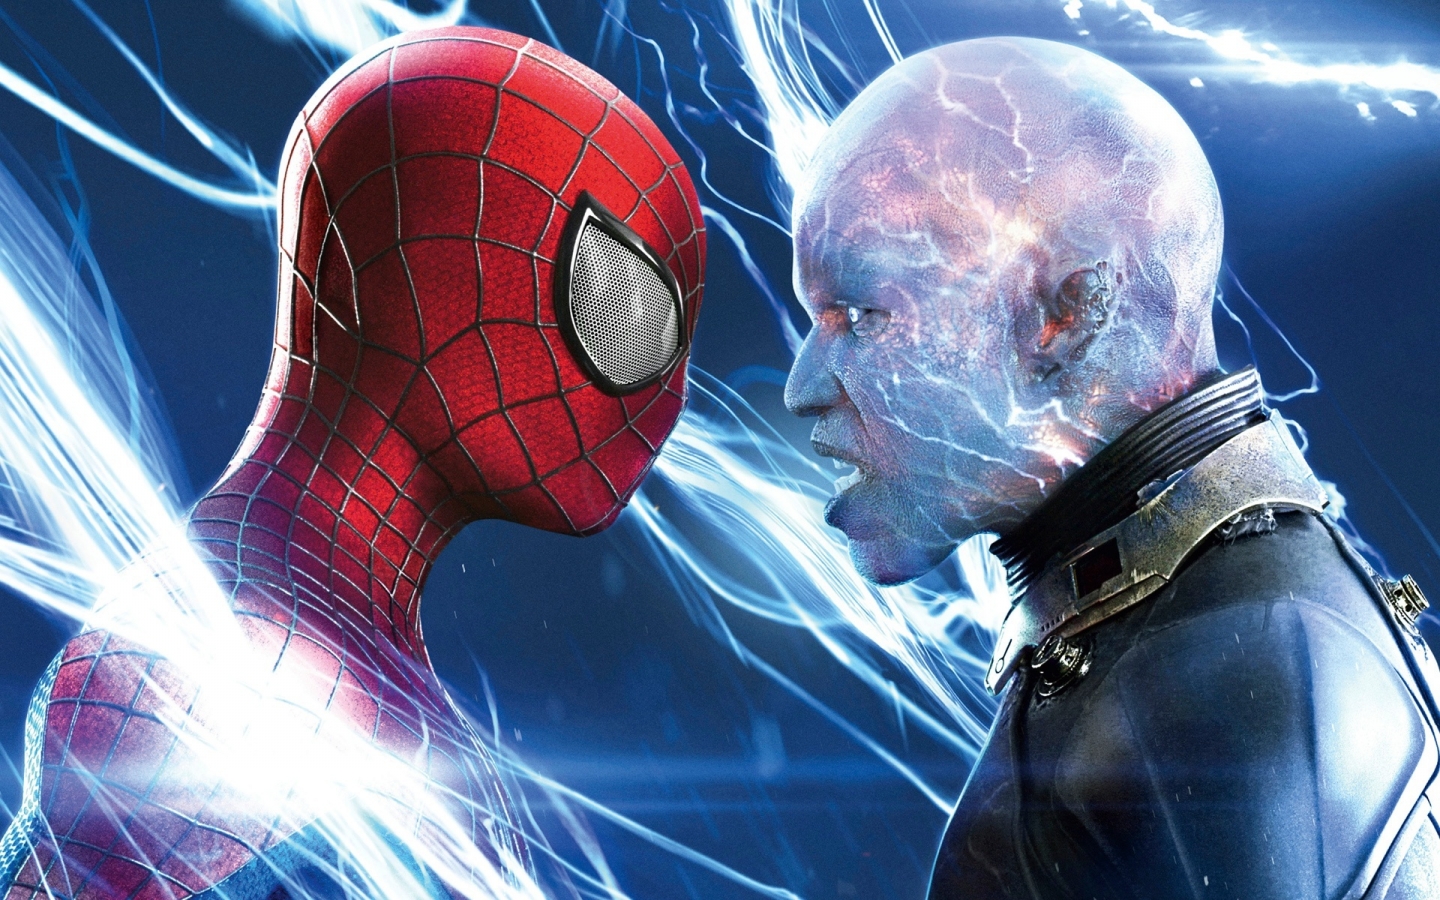 Spiderman vs Electro for 1440 x 900 widescreen resolution